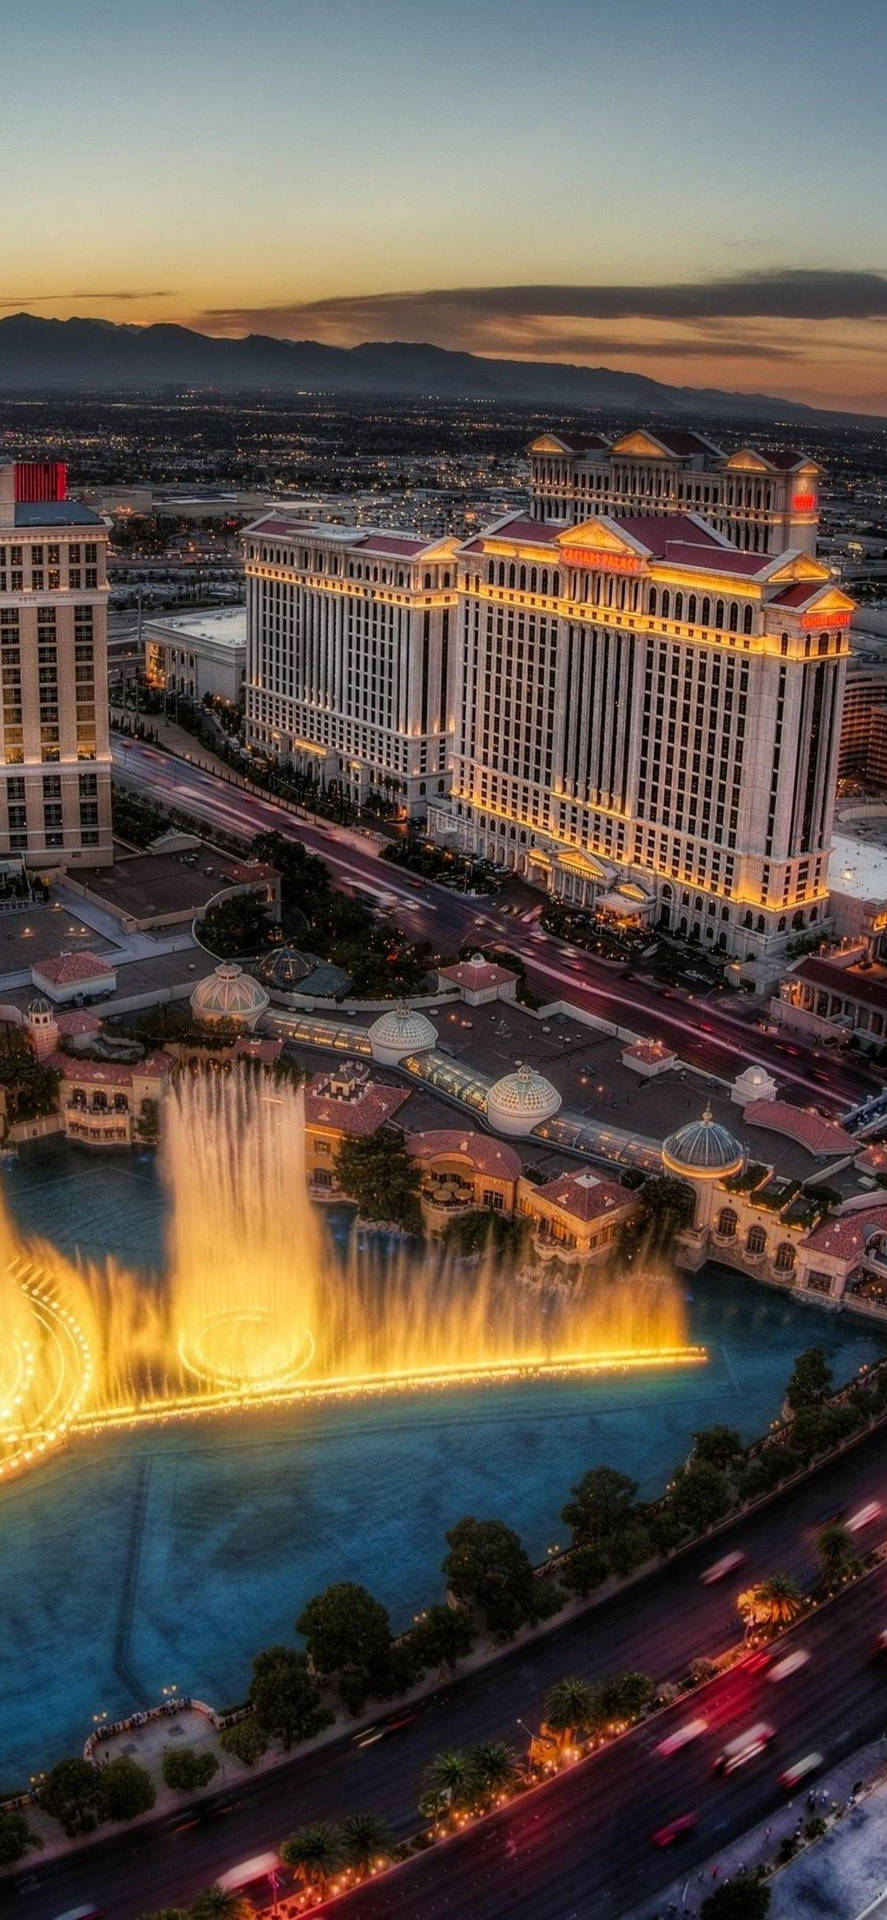 Illuminated Las Vegas Strip Viewed From An Iphone